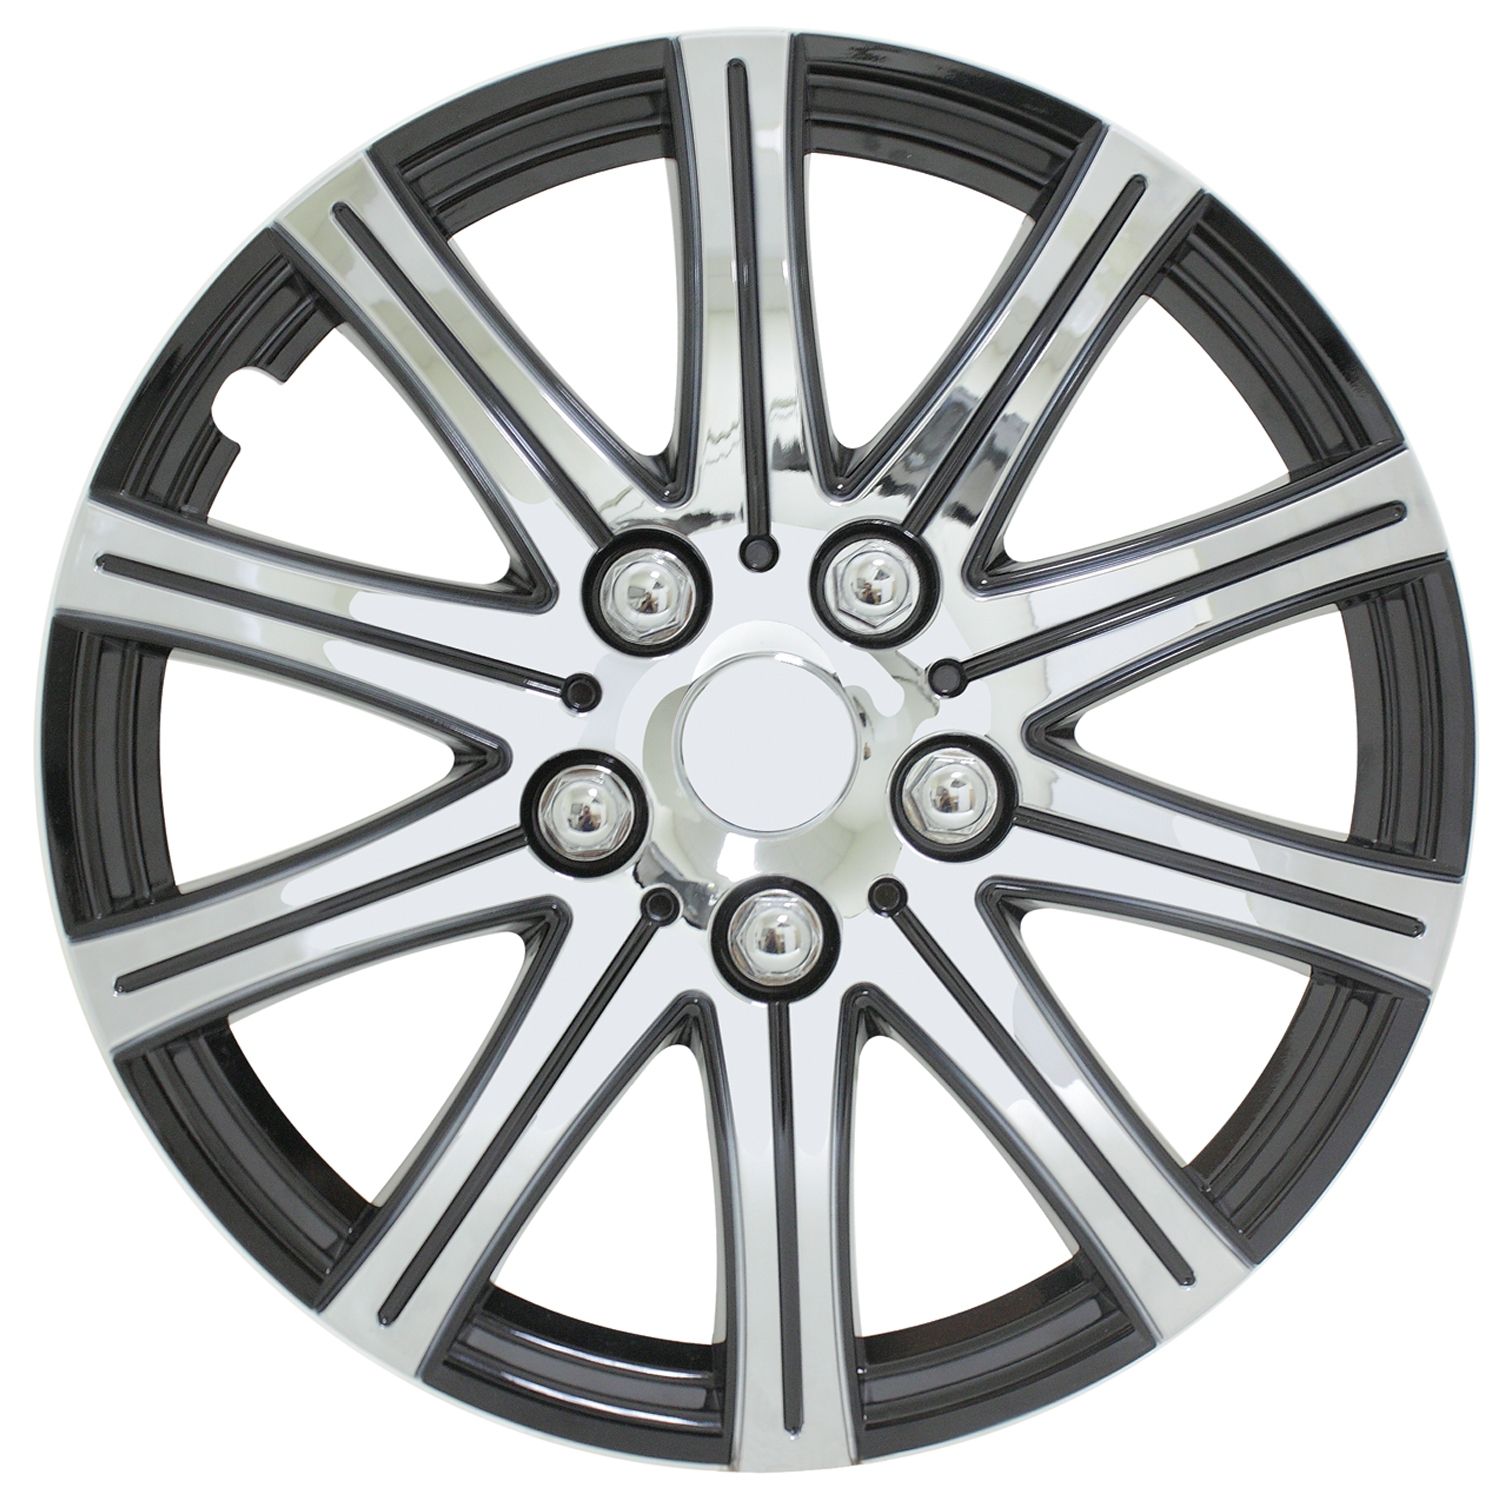 WeatherHandler Silver & Black 15 inch Wheel Cover